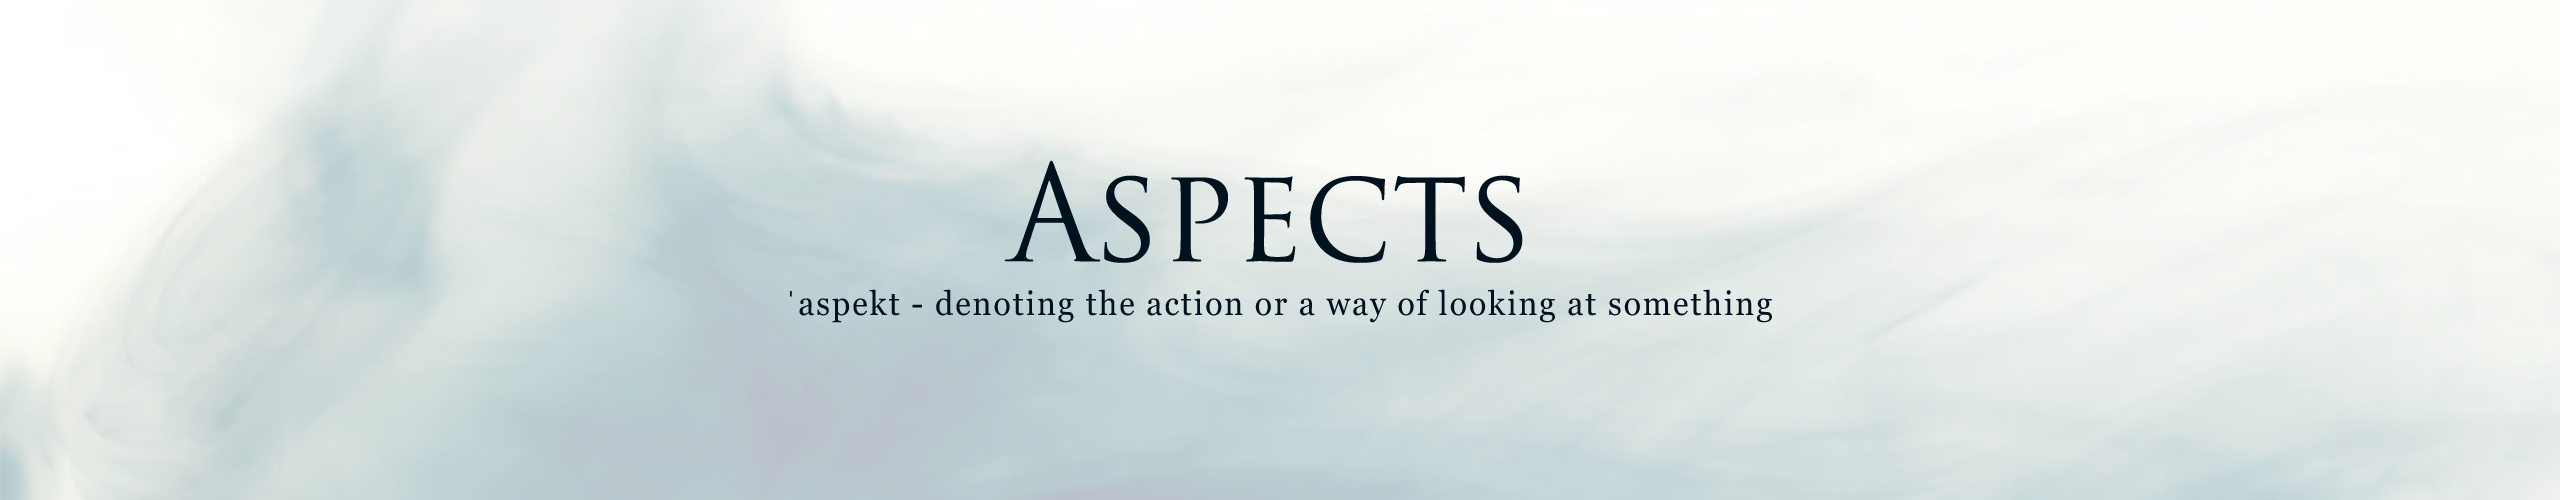 Aspects Blog